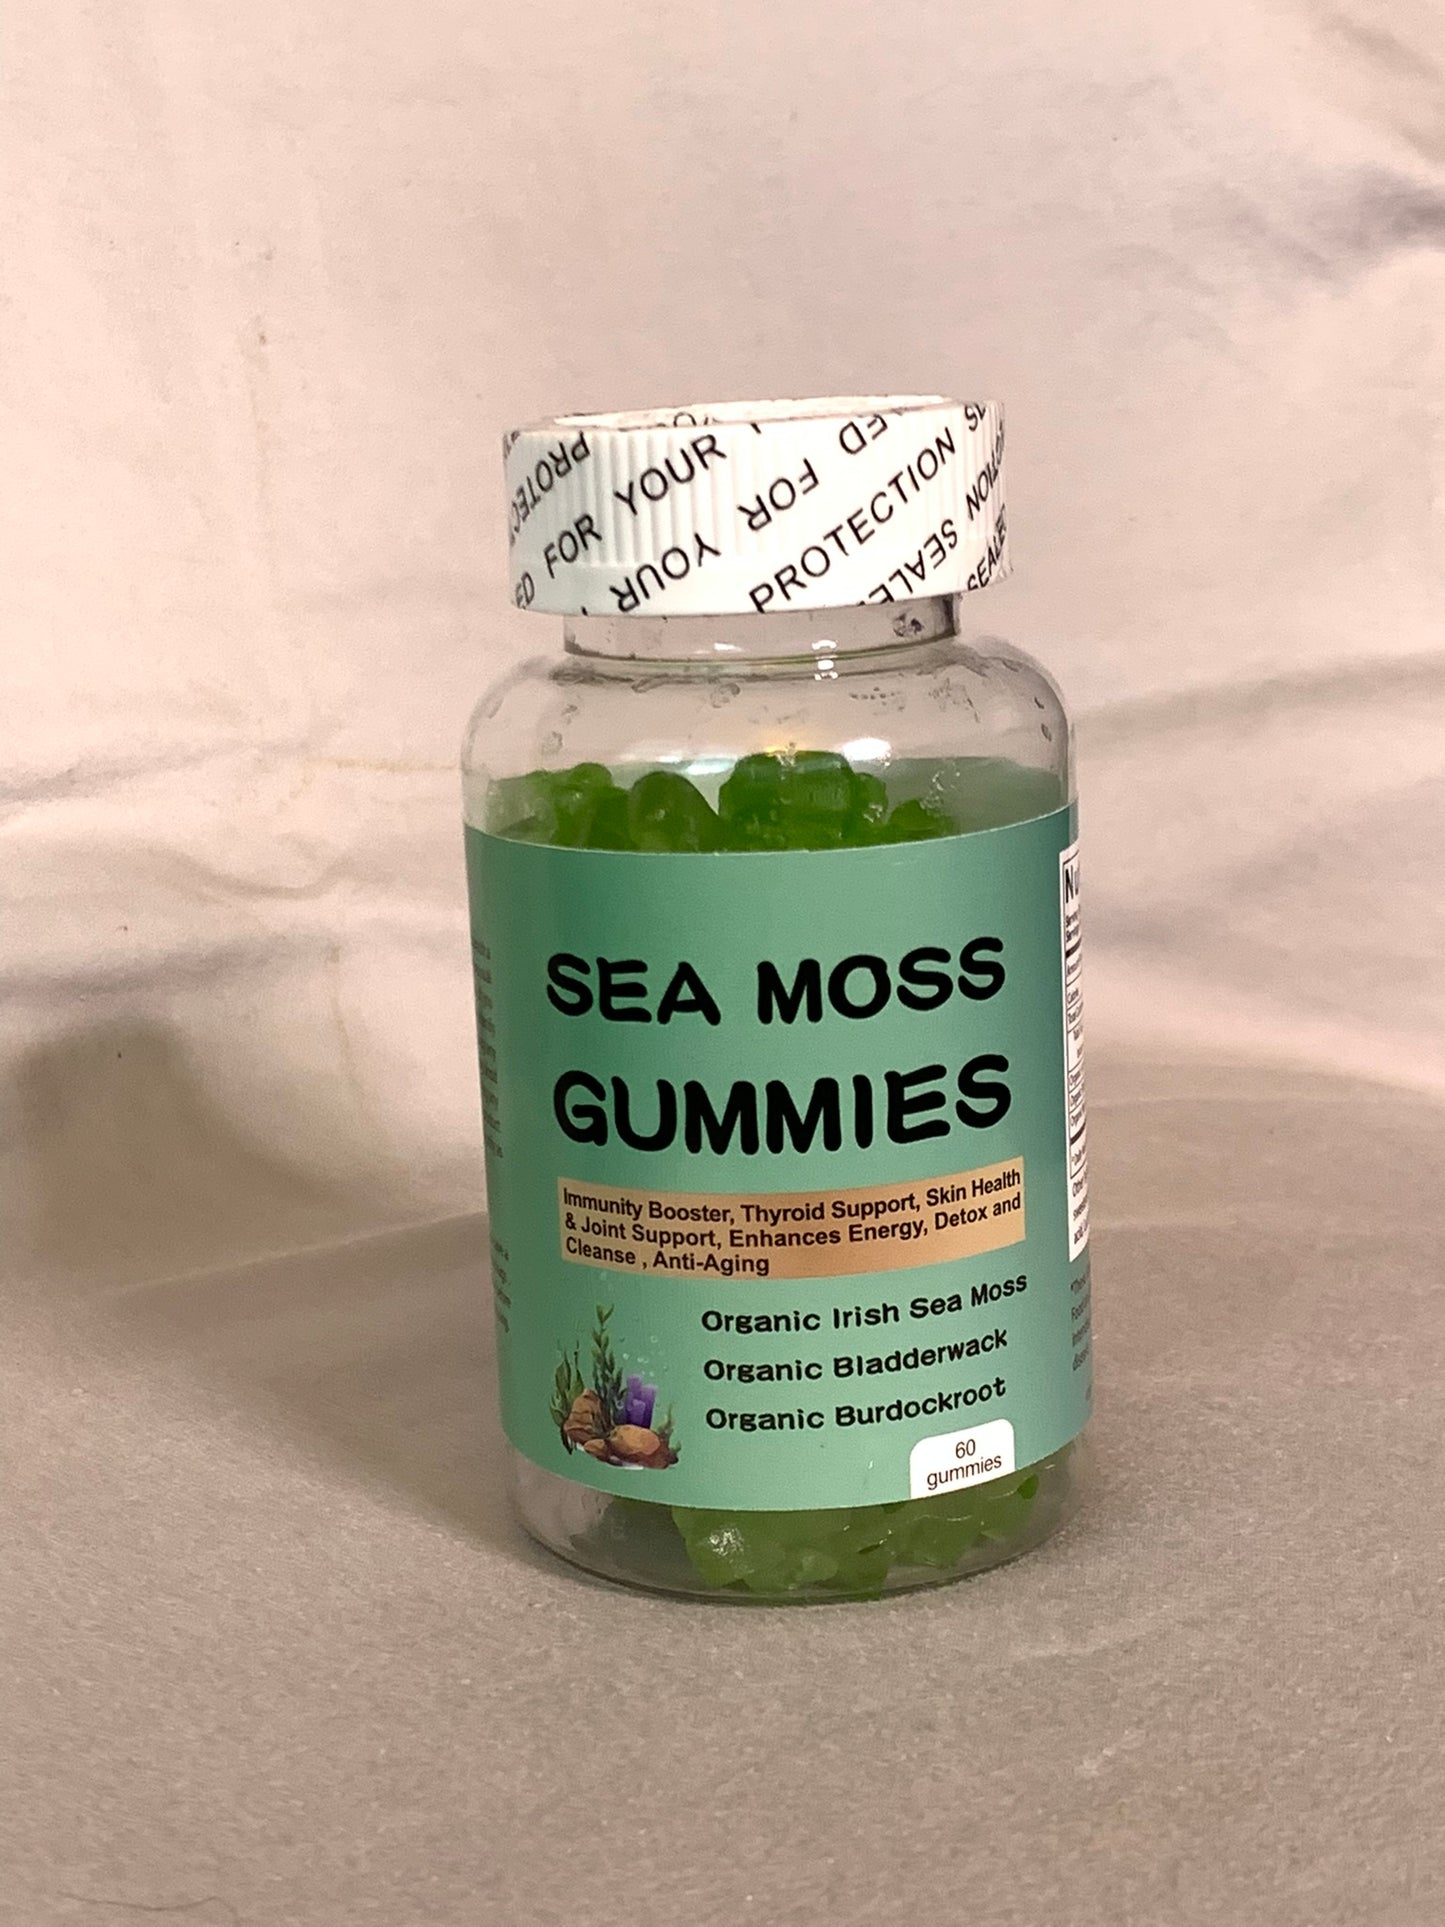 Irish Sea Moss Gummies, Bladderwack & Burdockroot